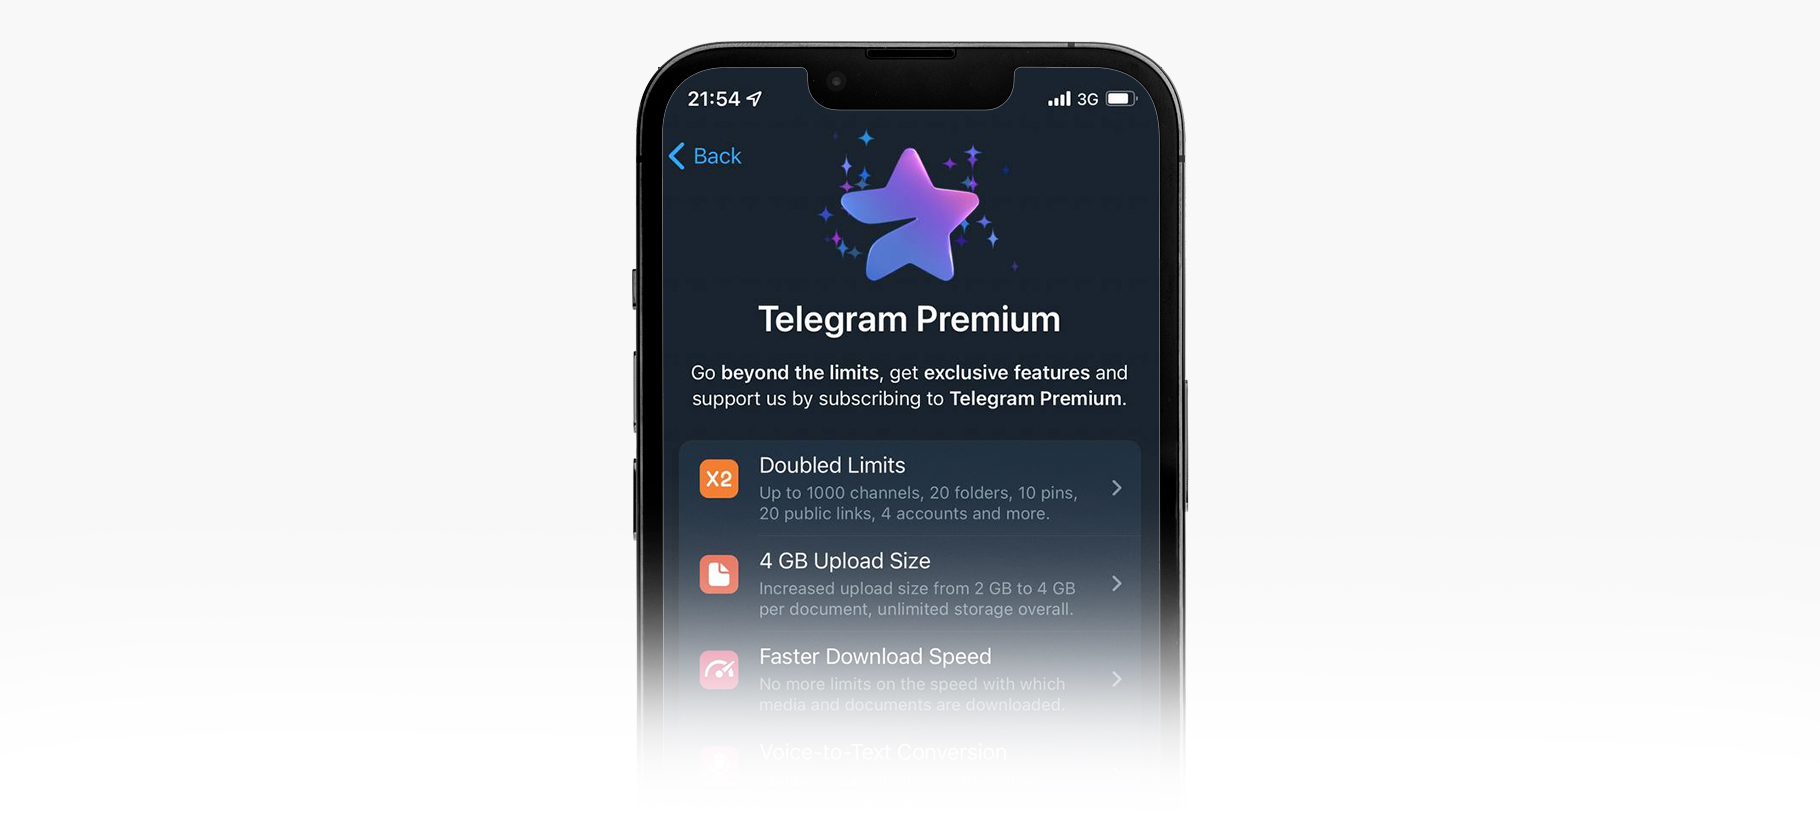 T me premium accounts. Телеграм Premium. Подписка Telegram Premium. \Телеграмм премиум каналы. Звездочка телеграмм премиум.